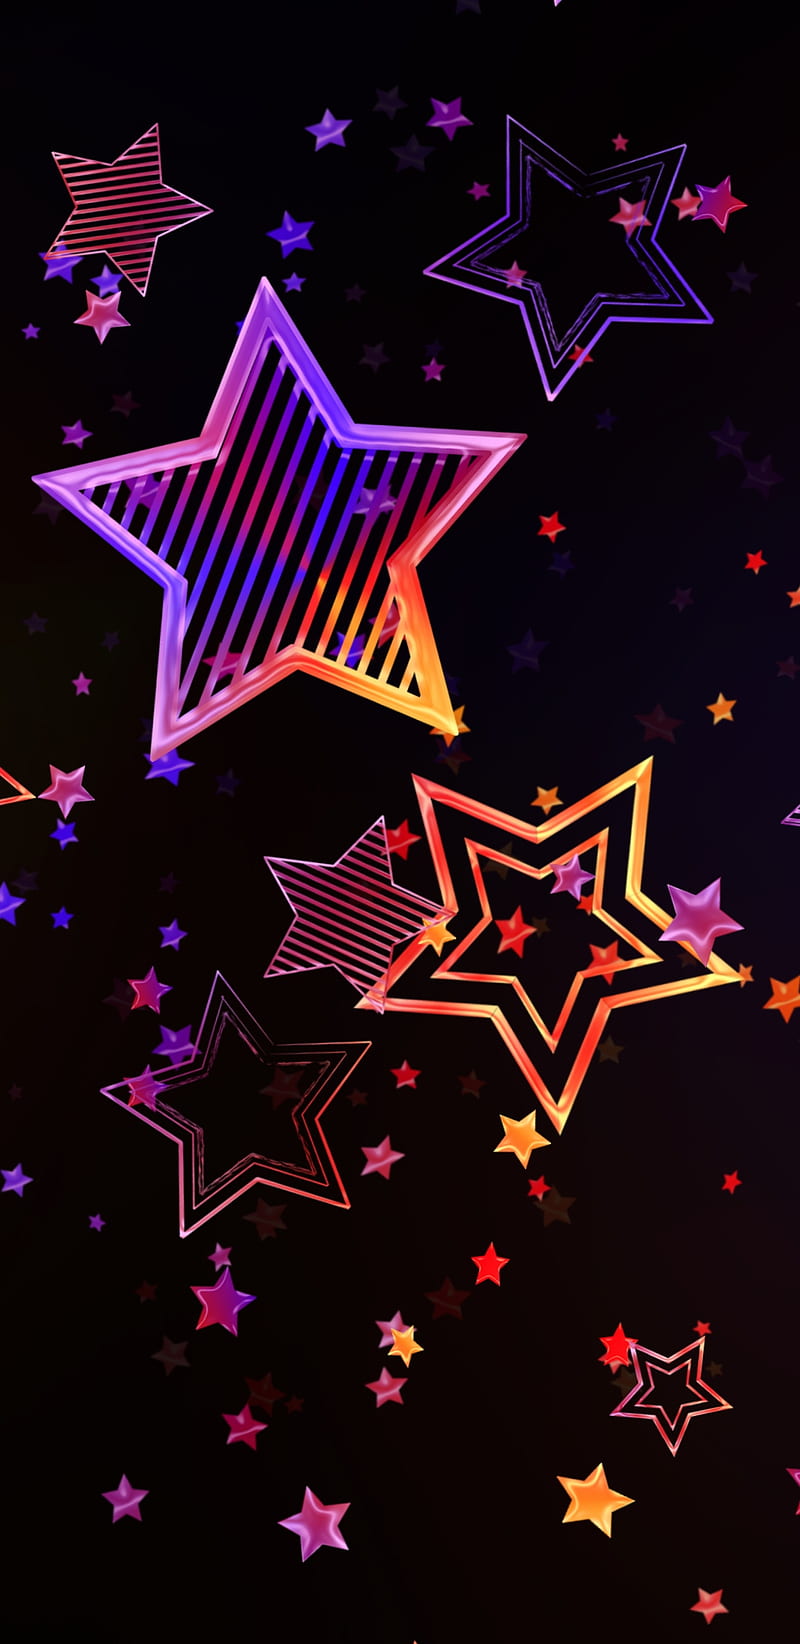 120 Background Of A Rainbow Stars Infinity Wallpaper Illustrations  RoyaltyFree Vector Graphics  Clip Art  iStock